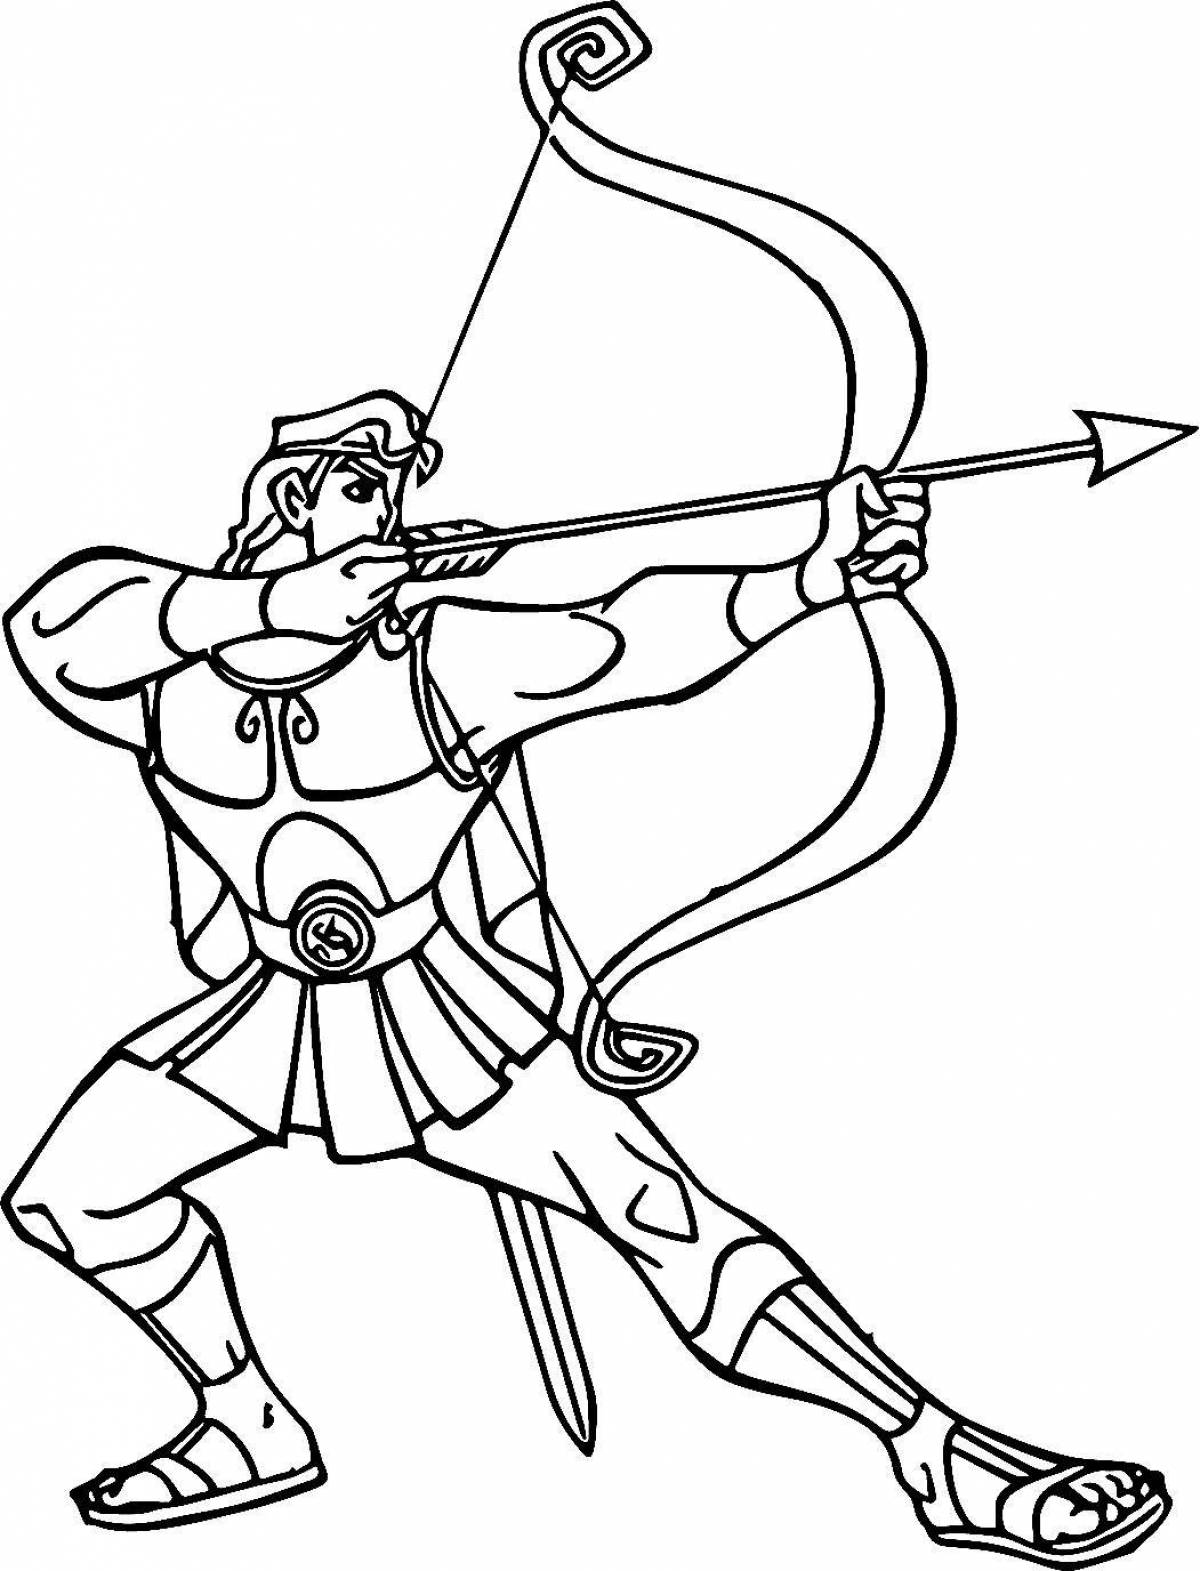 Coloring book brave archer